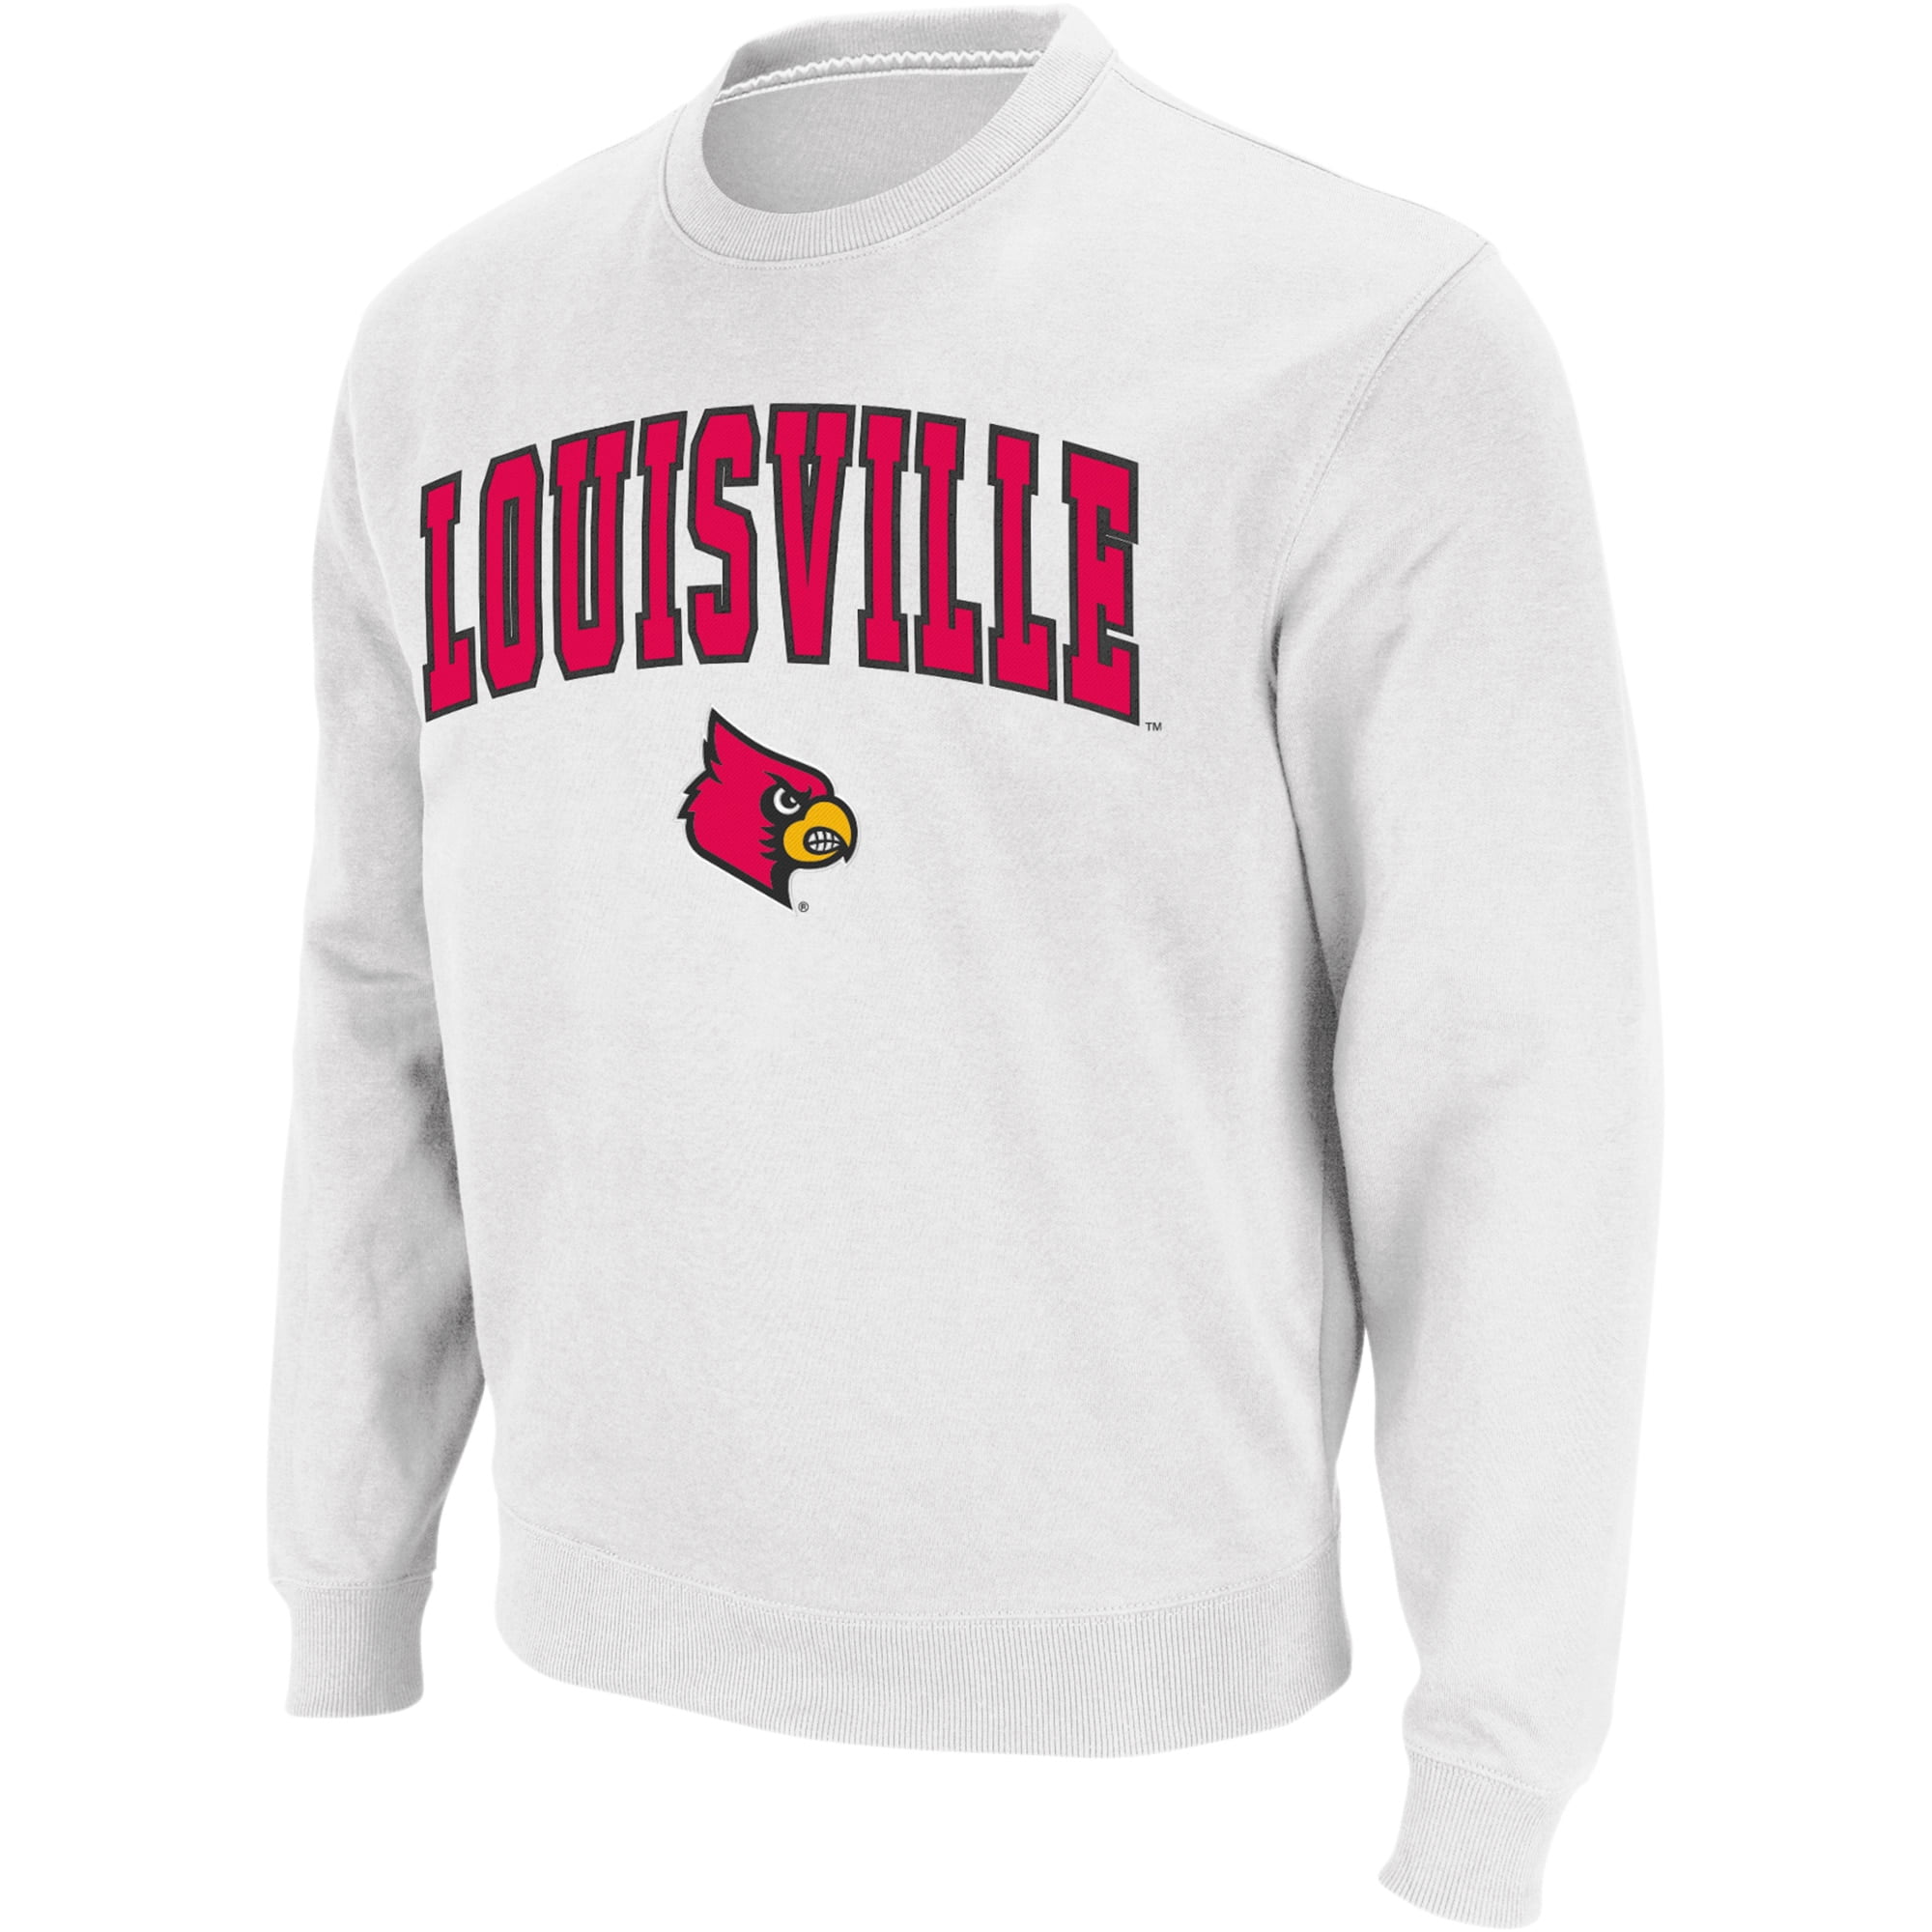 Louisville Cardinals Hoodie Mens 3XL Red Sweatshirt Sweater